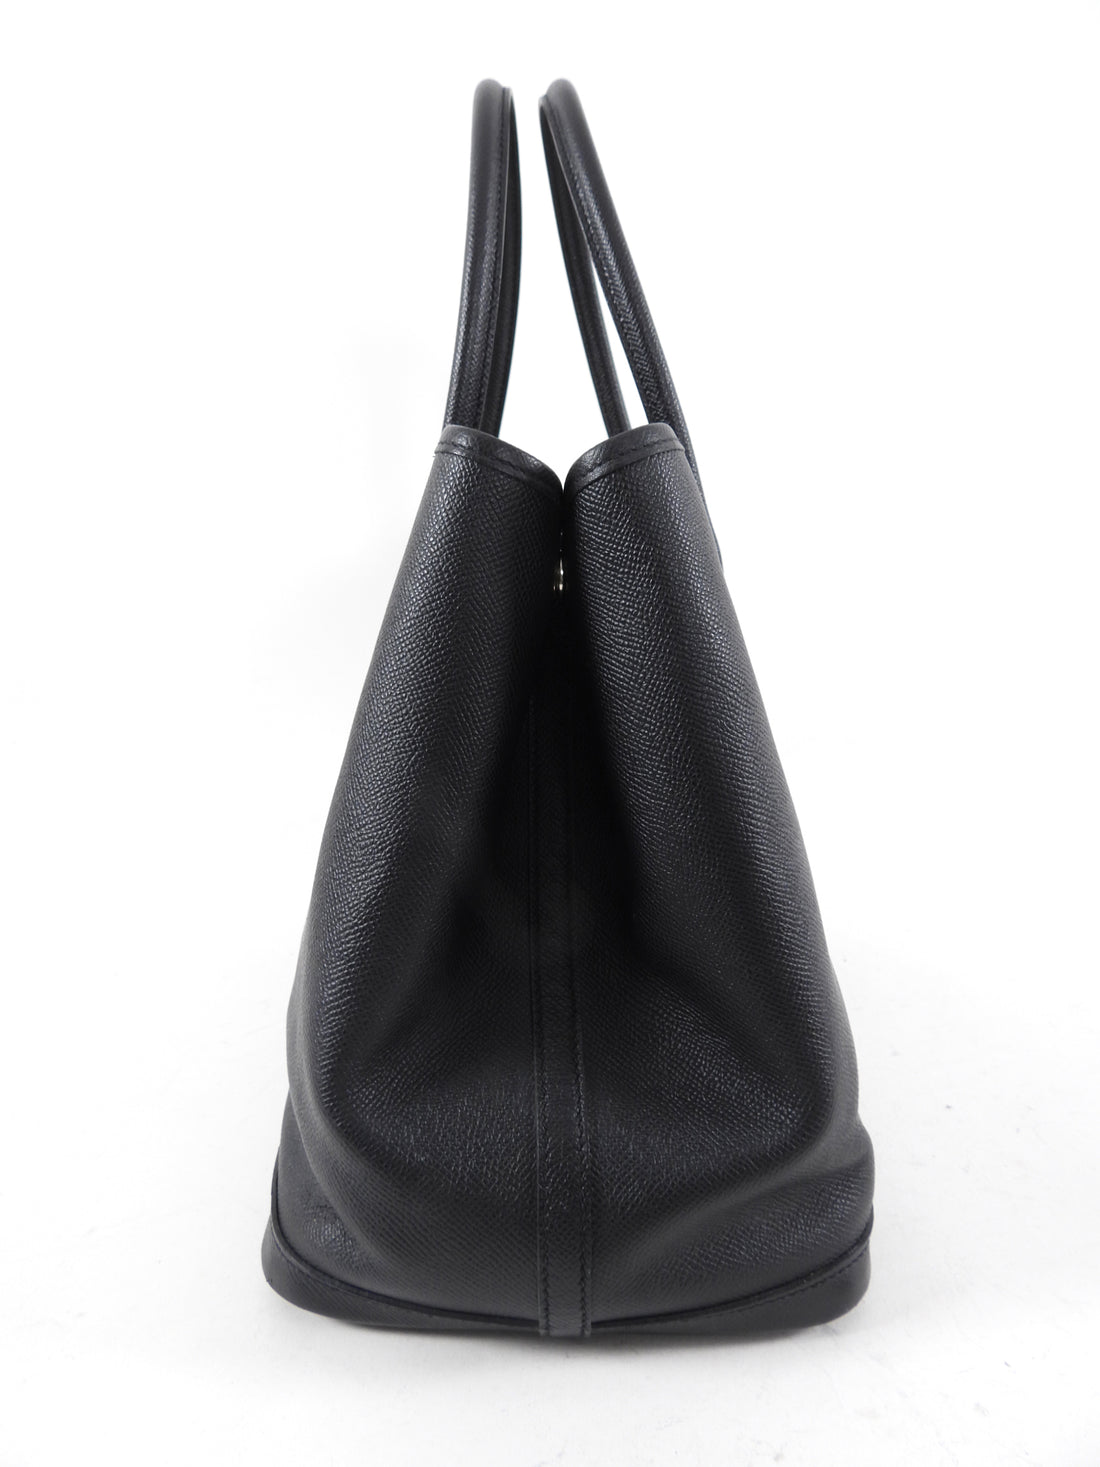 Hermes Garden Party Medium PM 36 Noir Black Leather Tote Bag